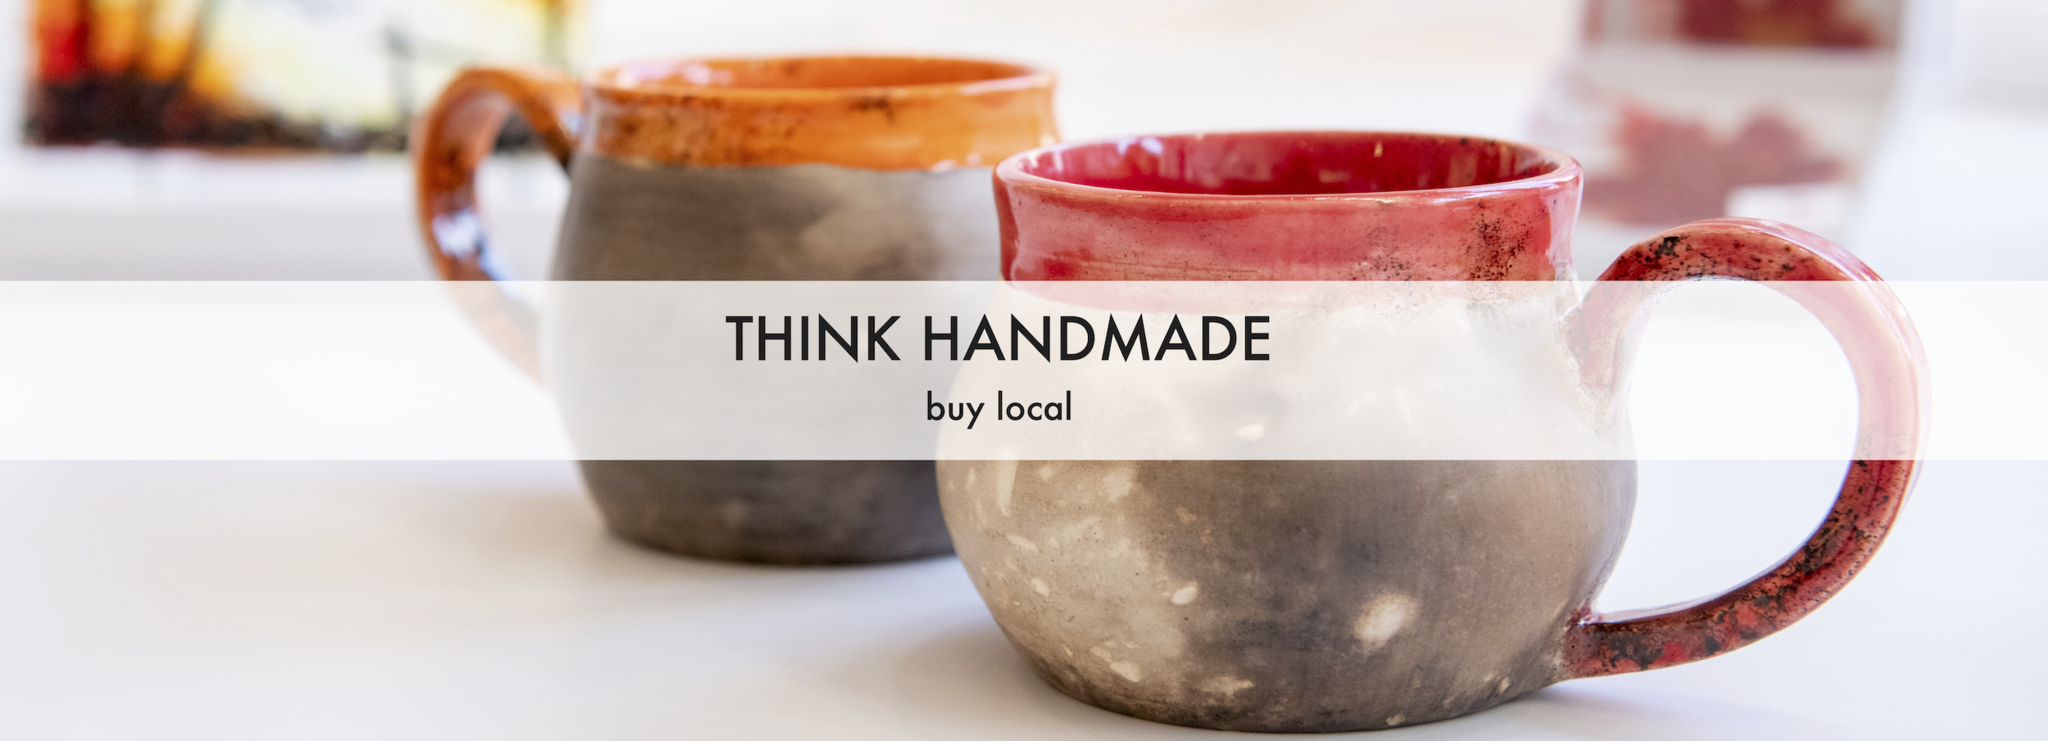 Think handmade 7